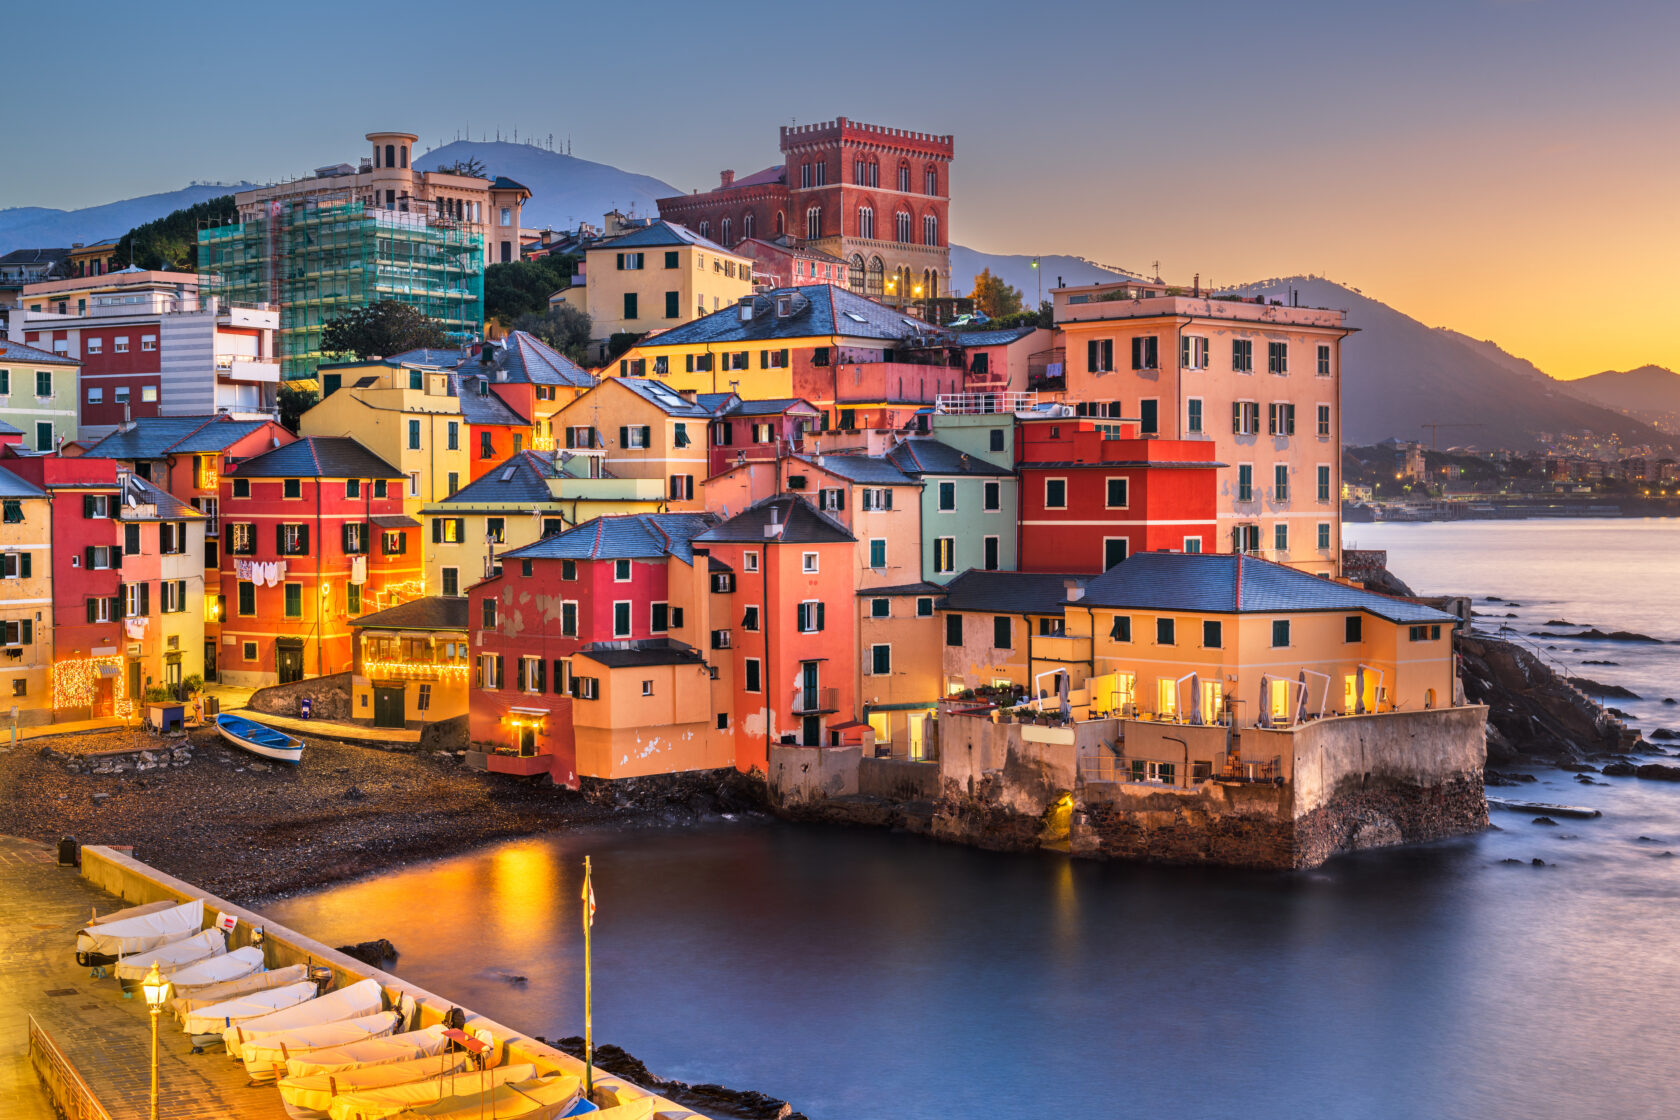 An old fishing village in Genoa (an Atlantis site).